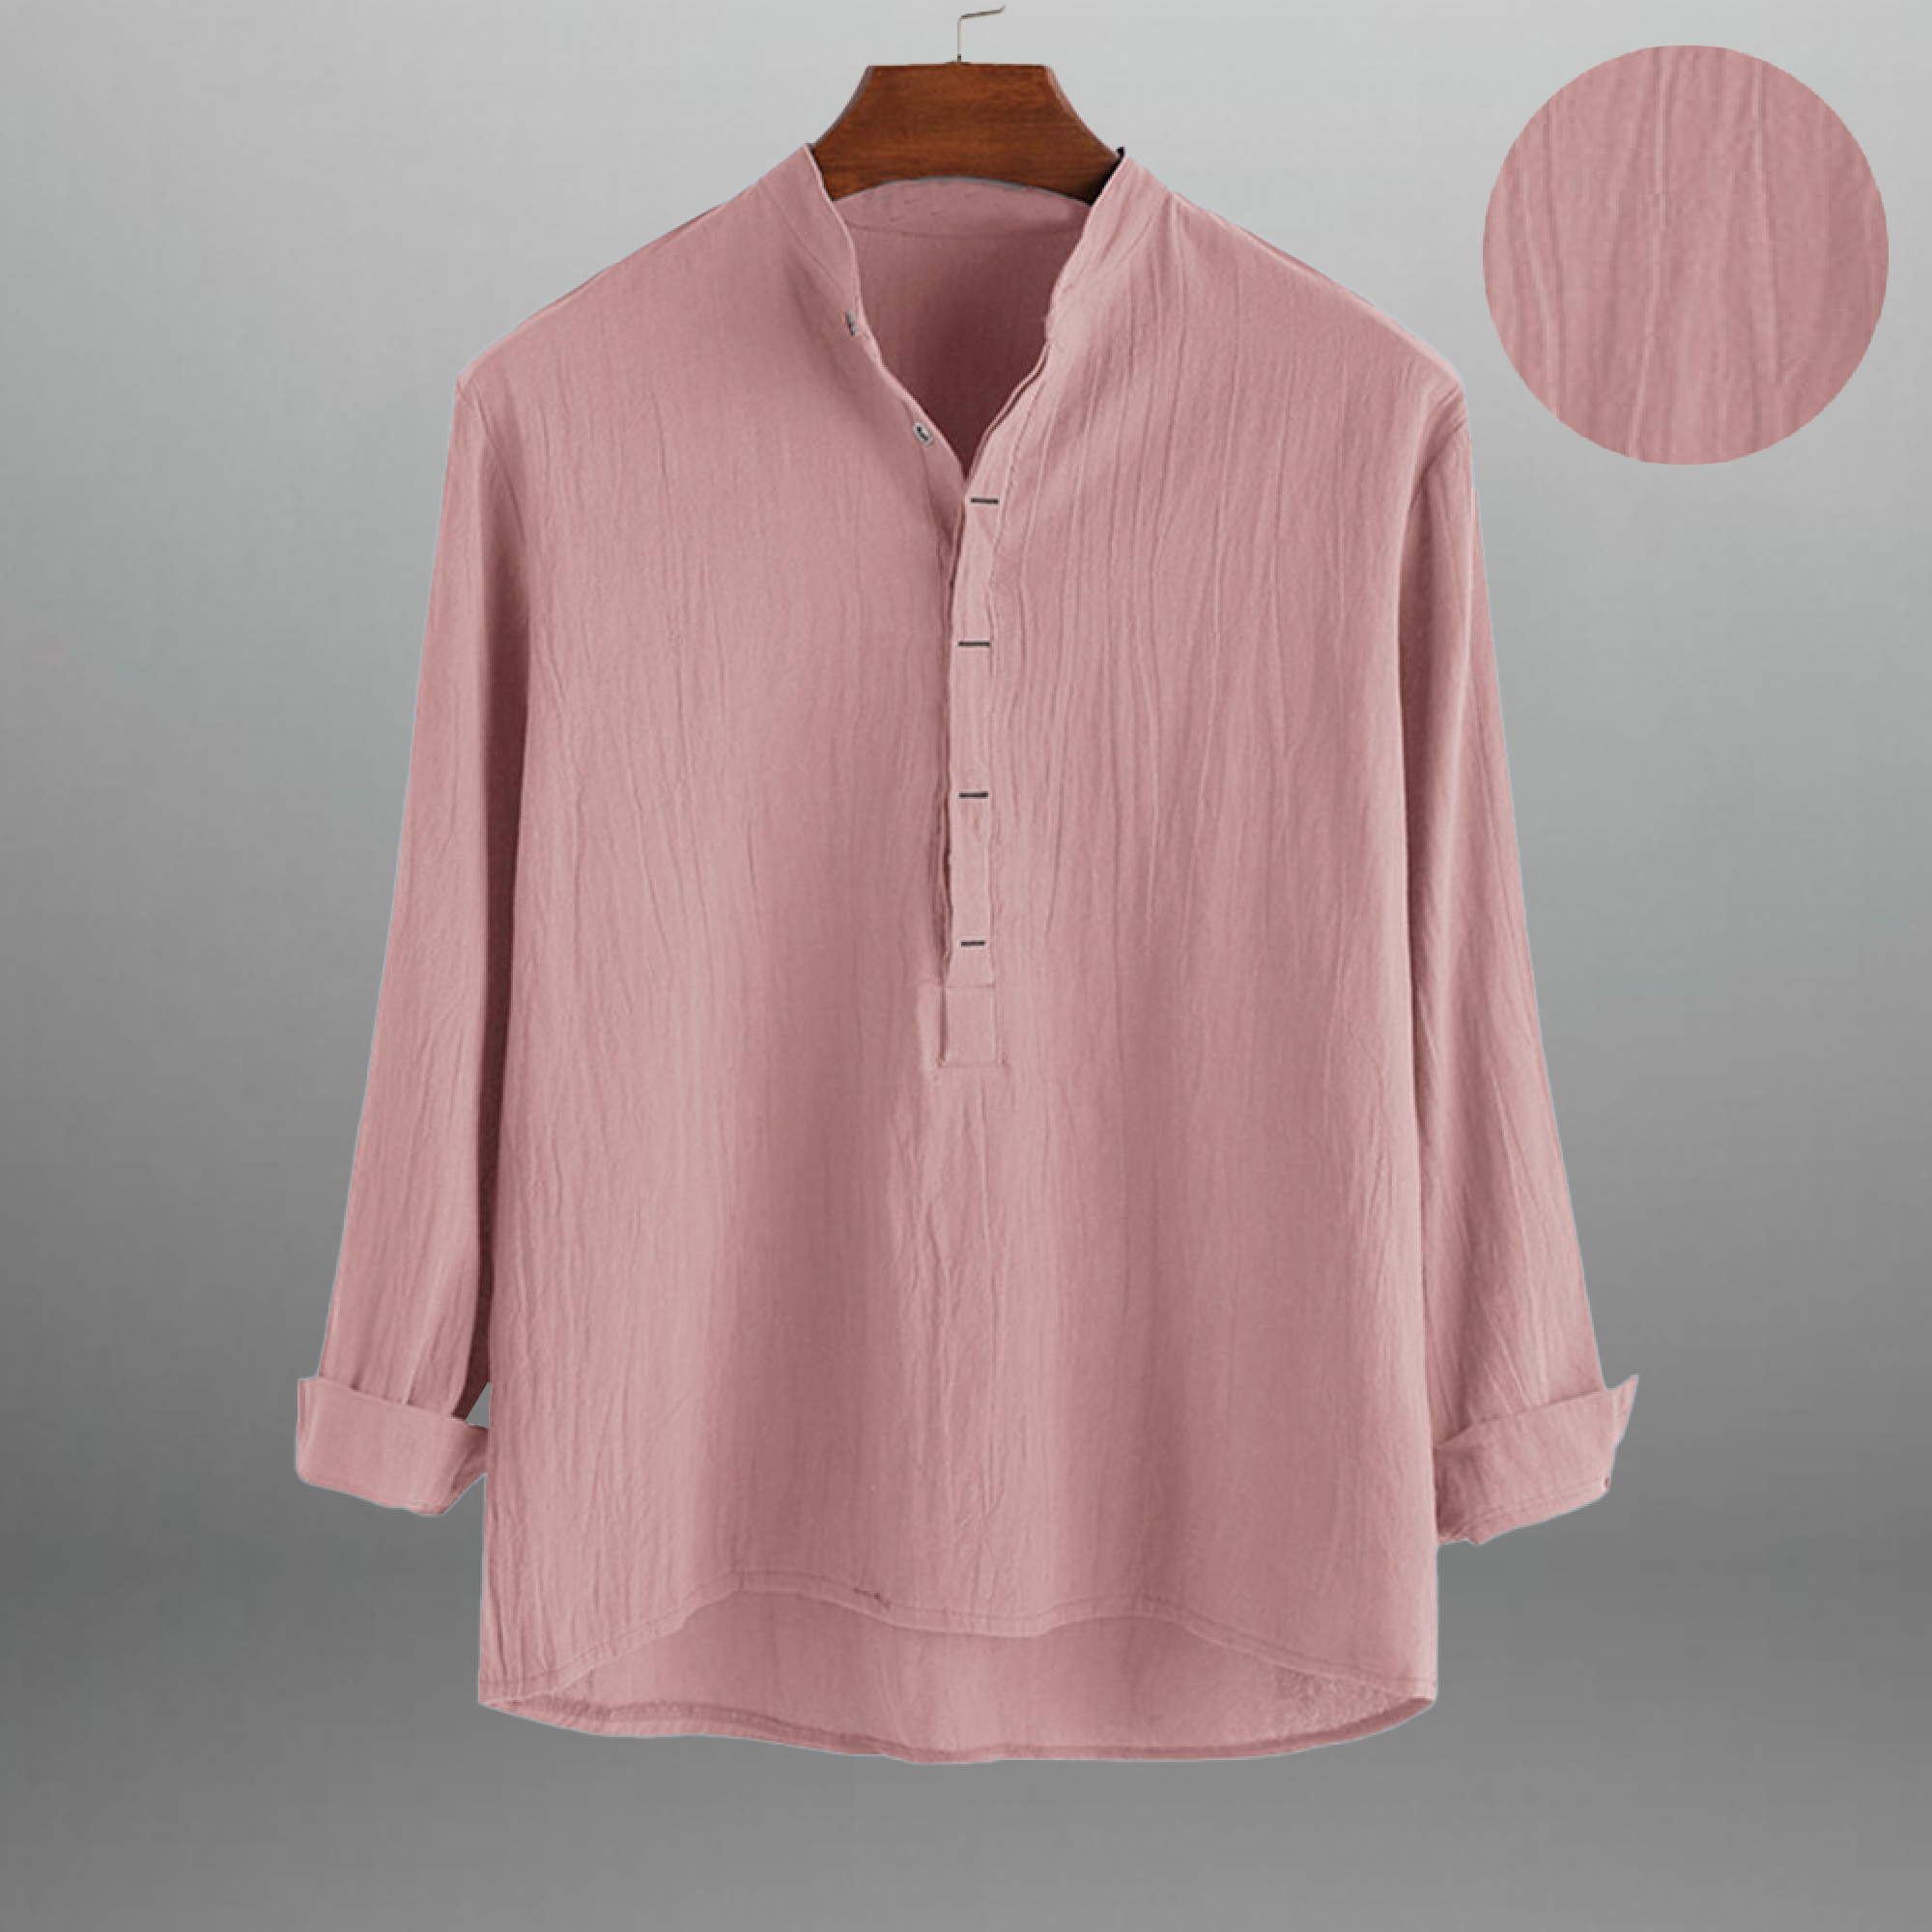 Men's Light Pink T-shirt style textured shirt-RMS024